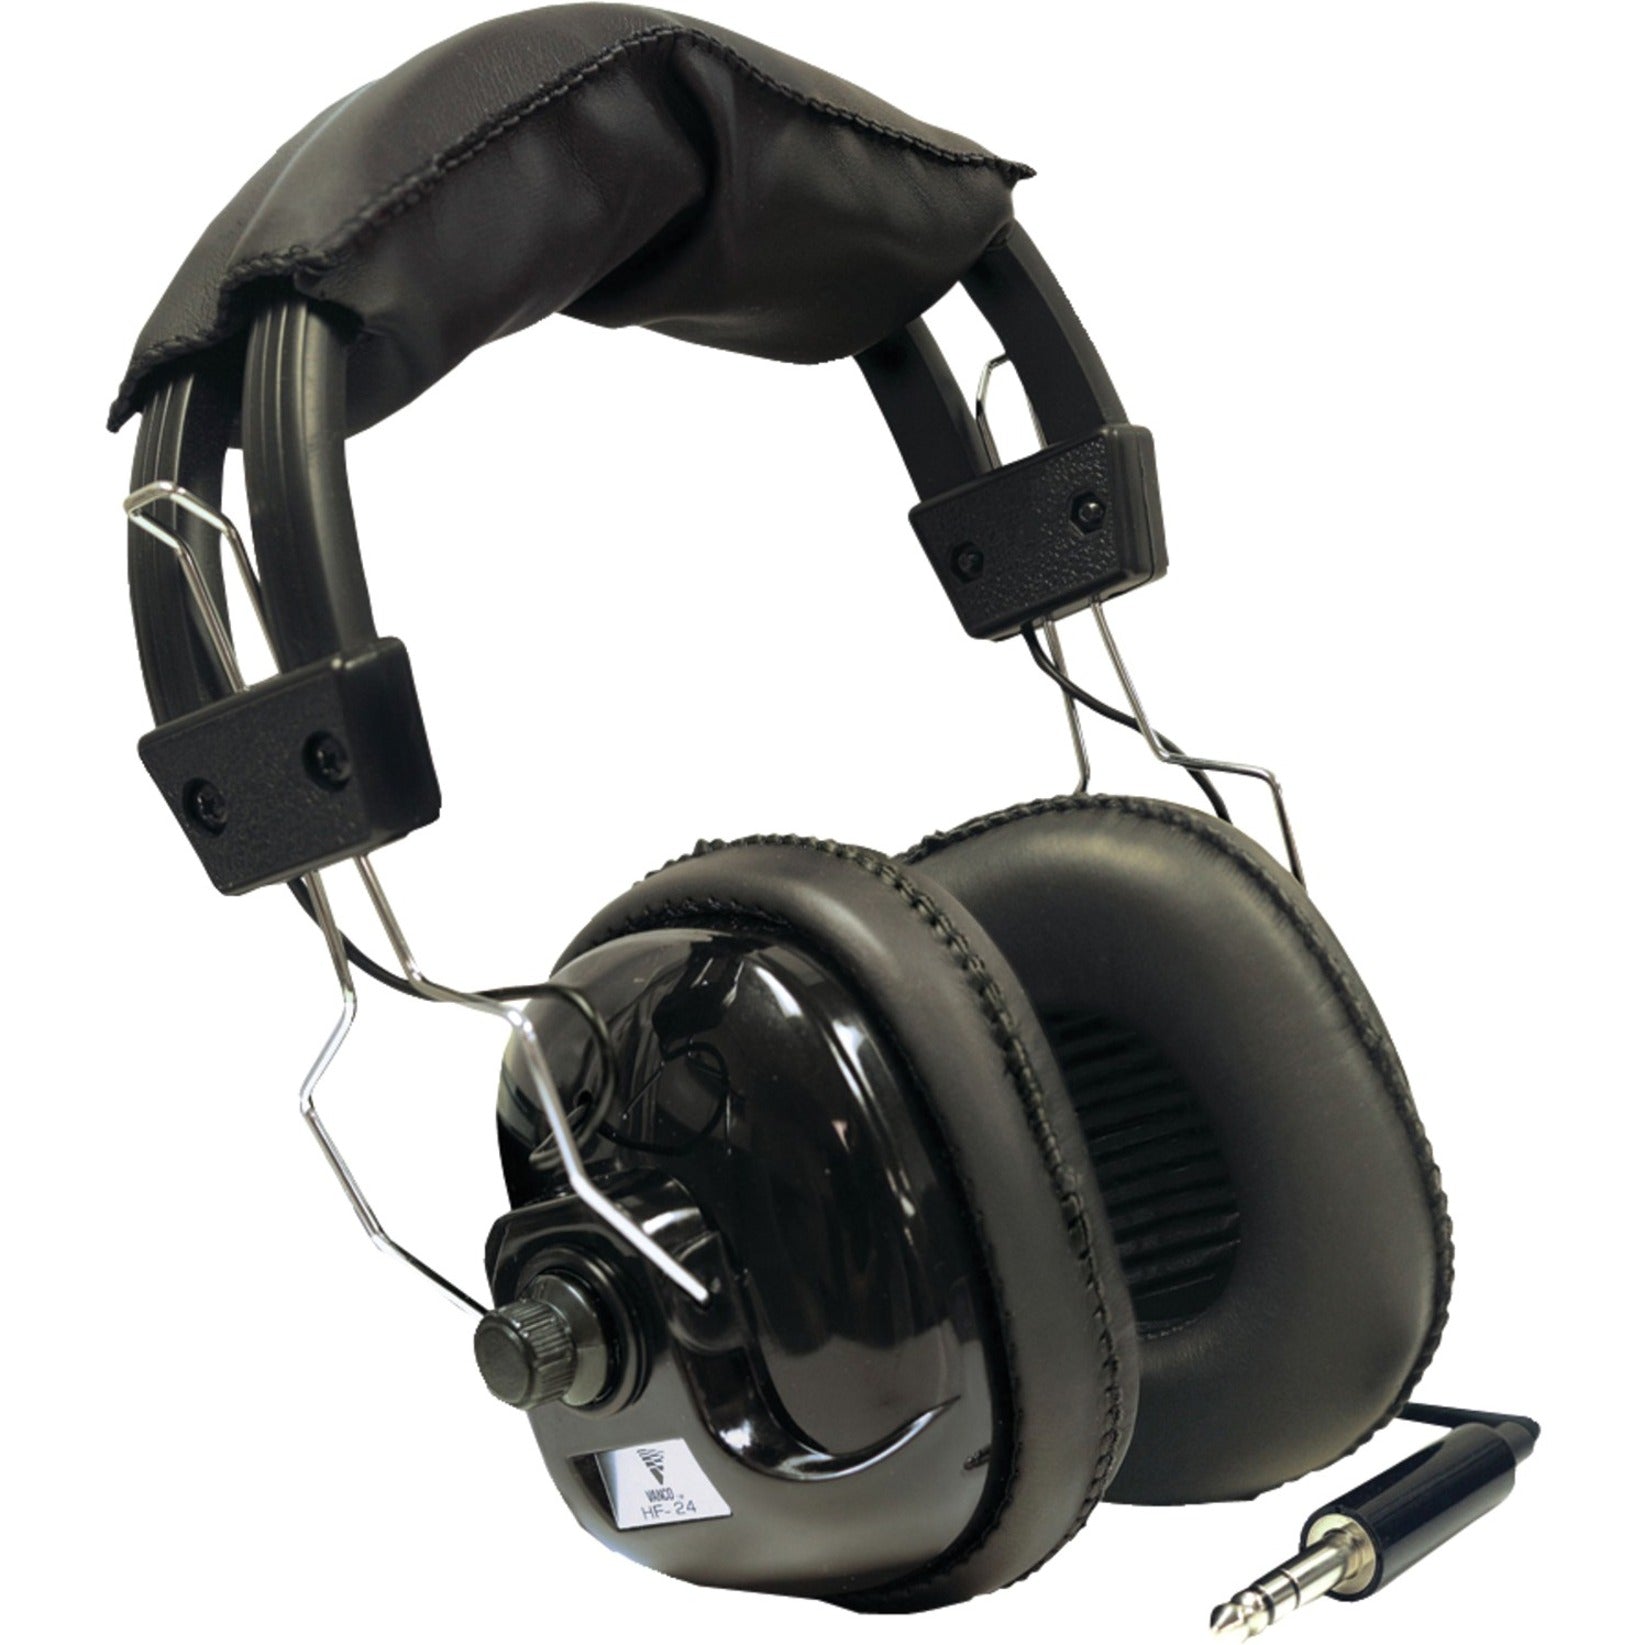 Bounty Hunter HEAD-W Metal Detector Binaural Headphone, Lightweight Over-the-head Stereo Ear-cup with Volume Control